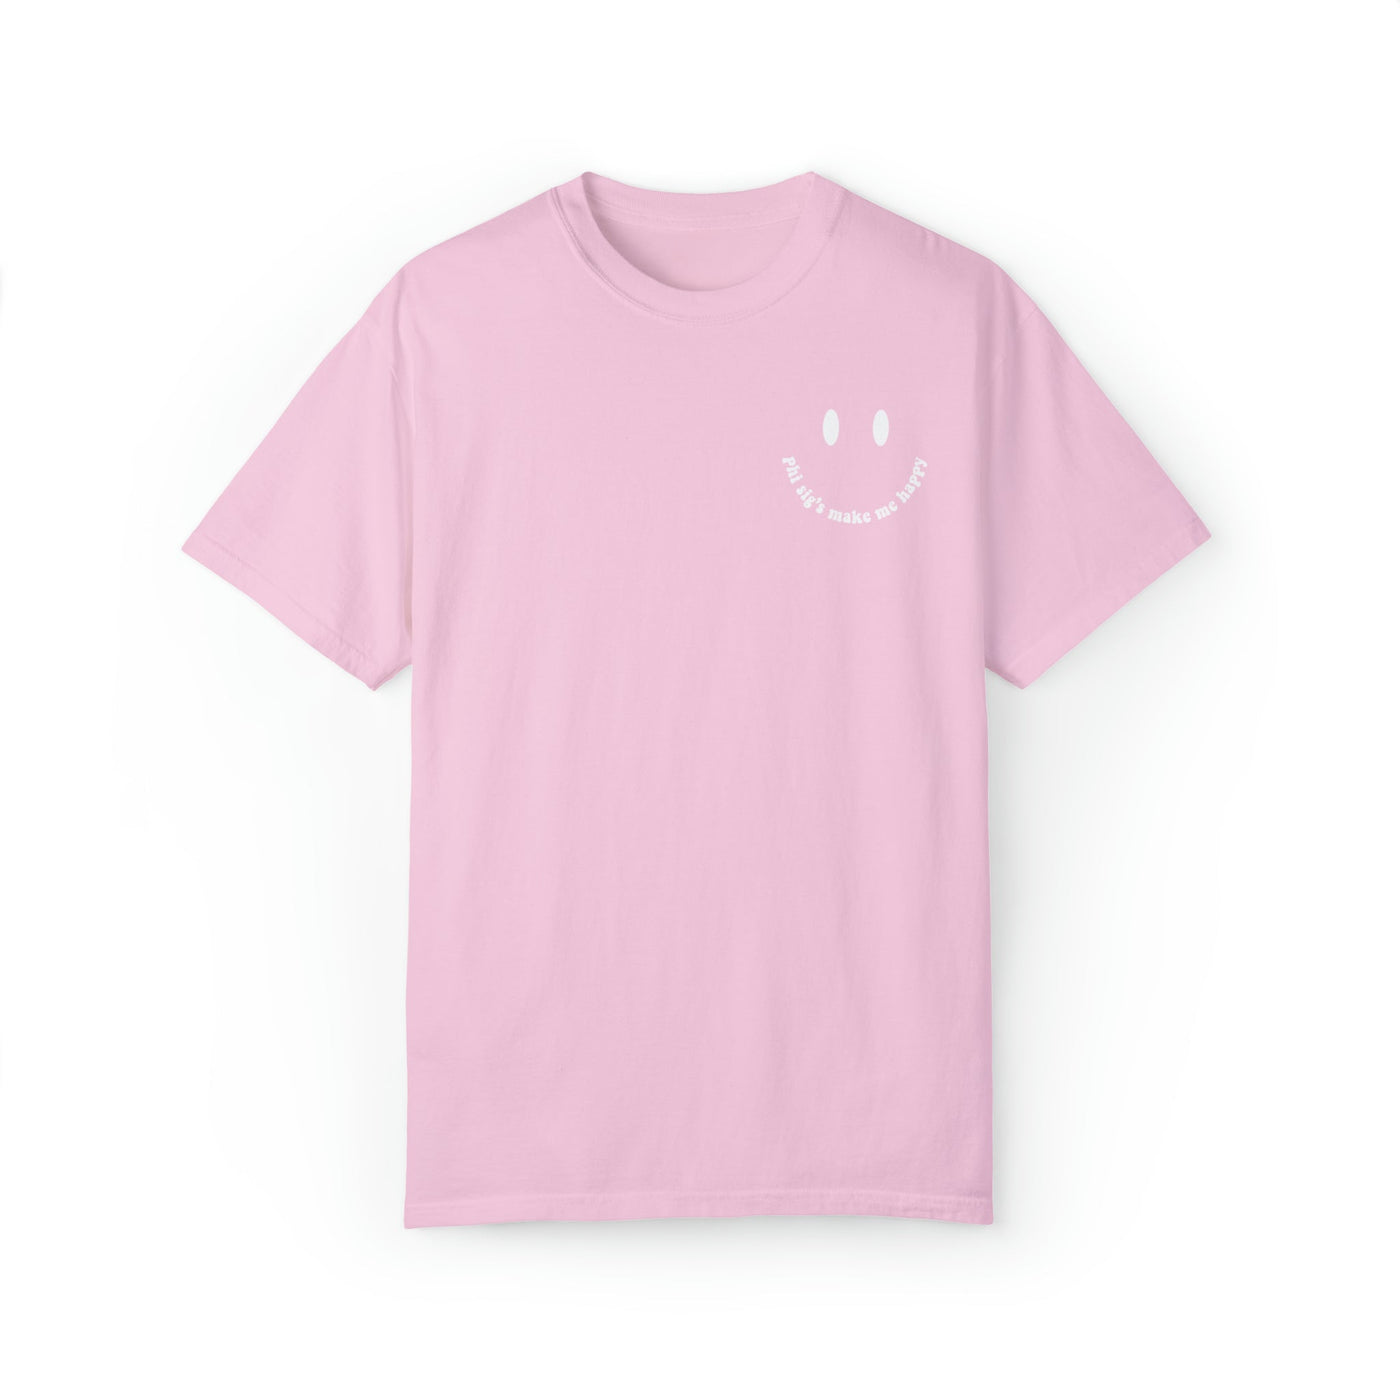 Phi Sigma Sigma's Make Me Happy Sorority Comfy T-shirt